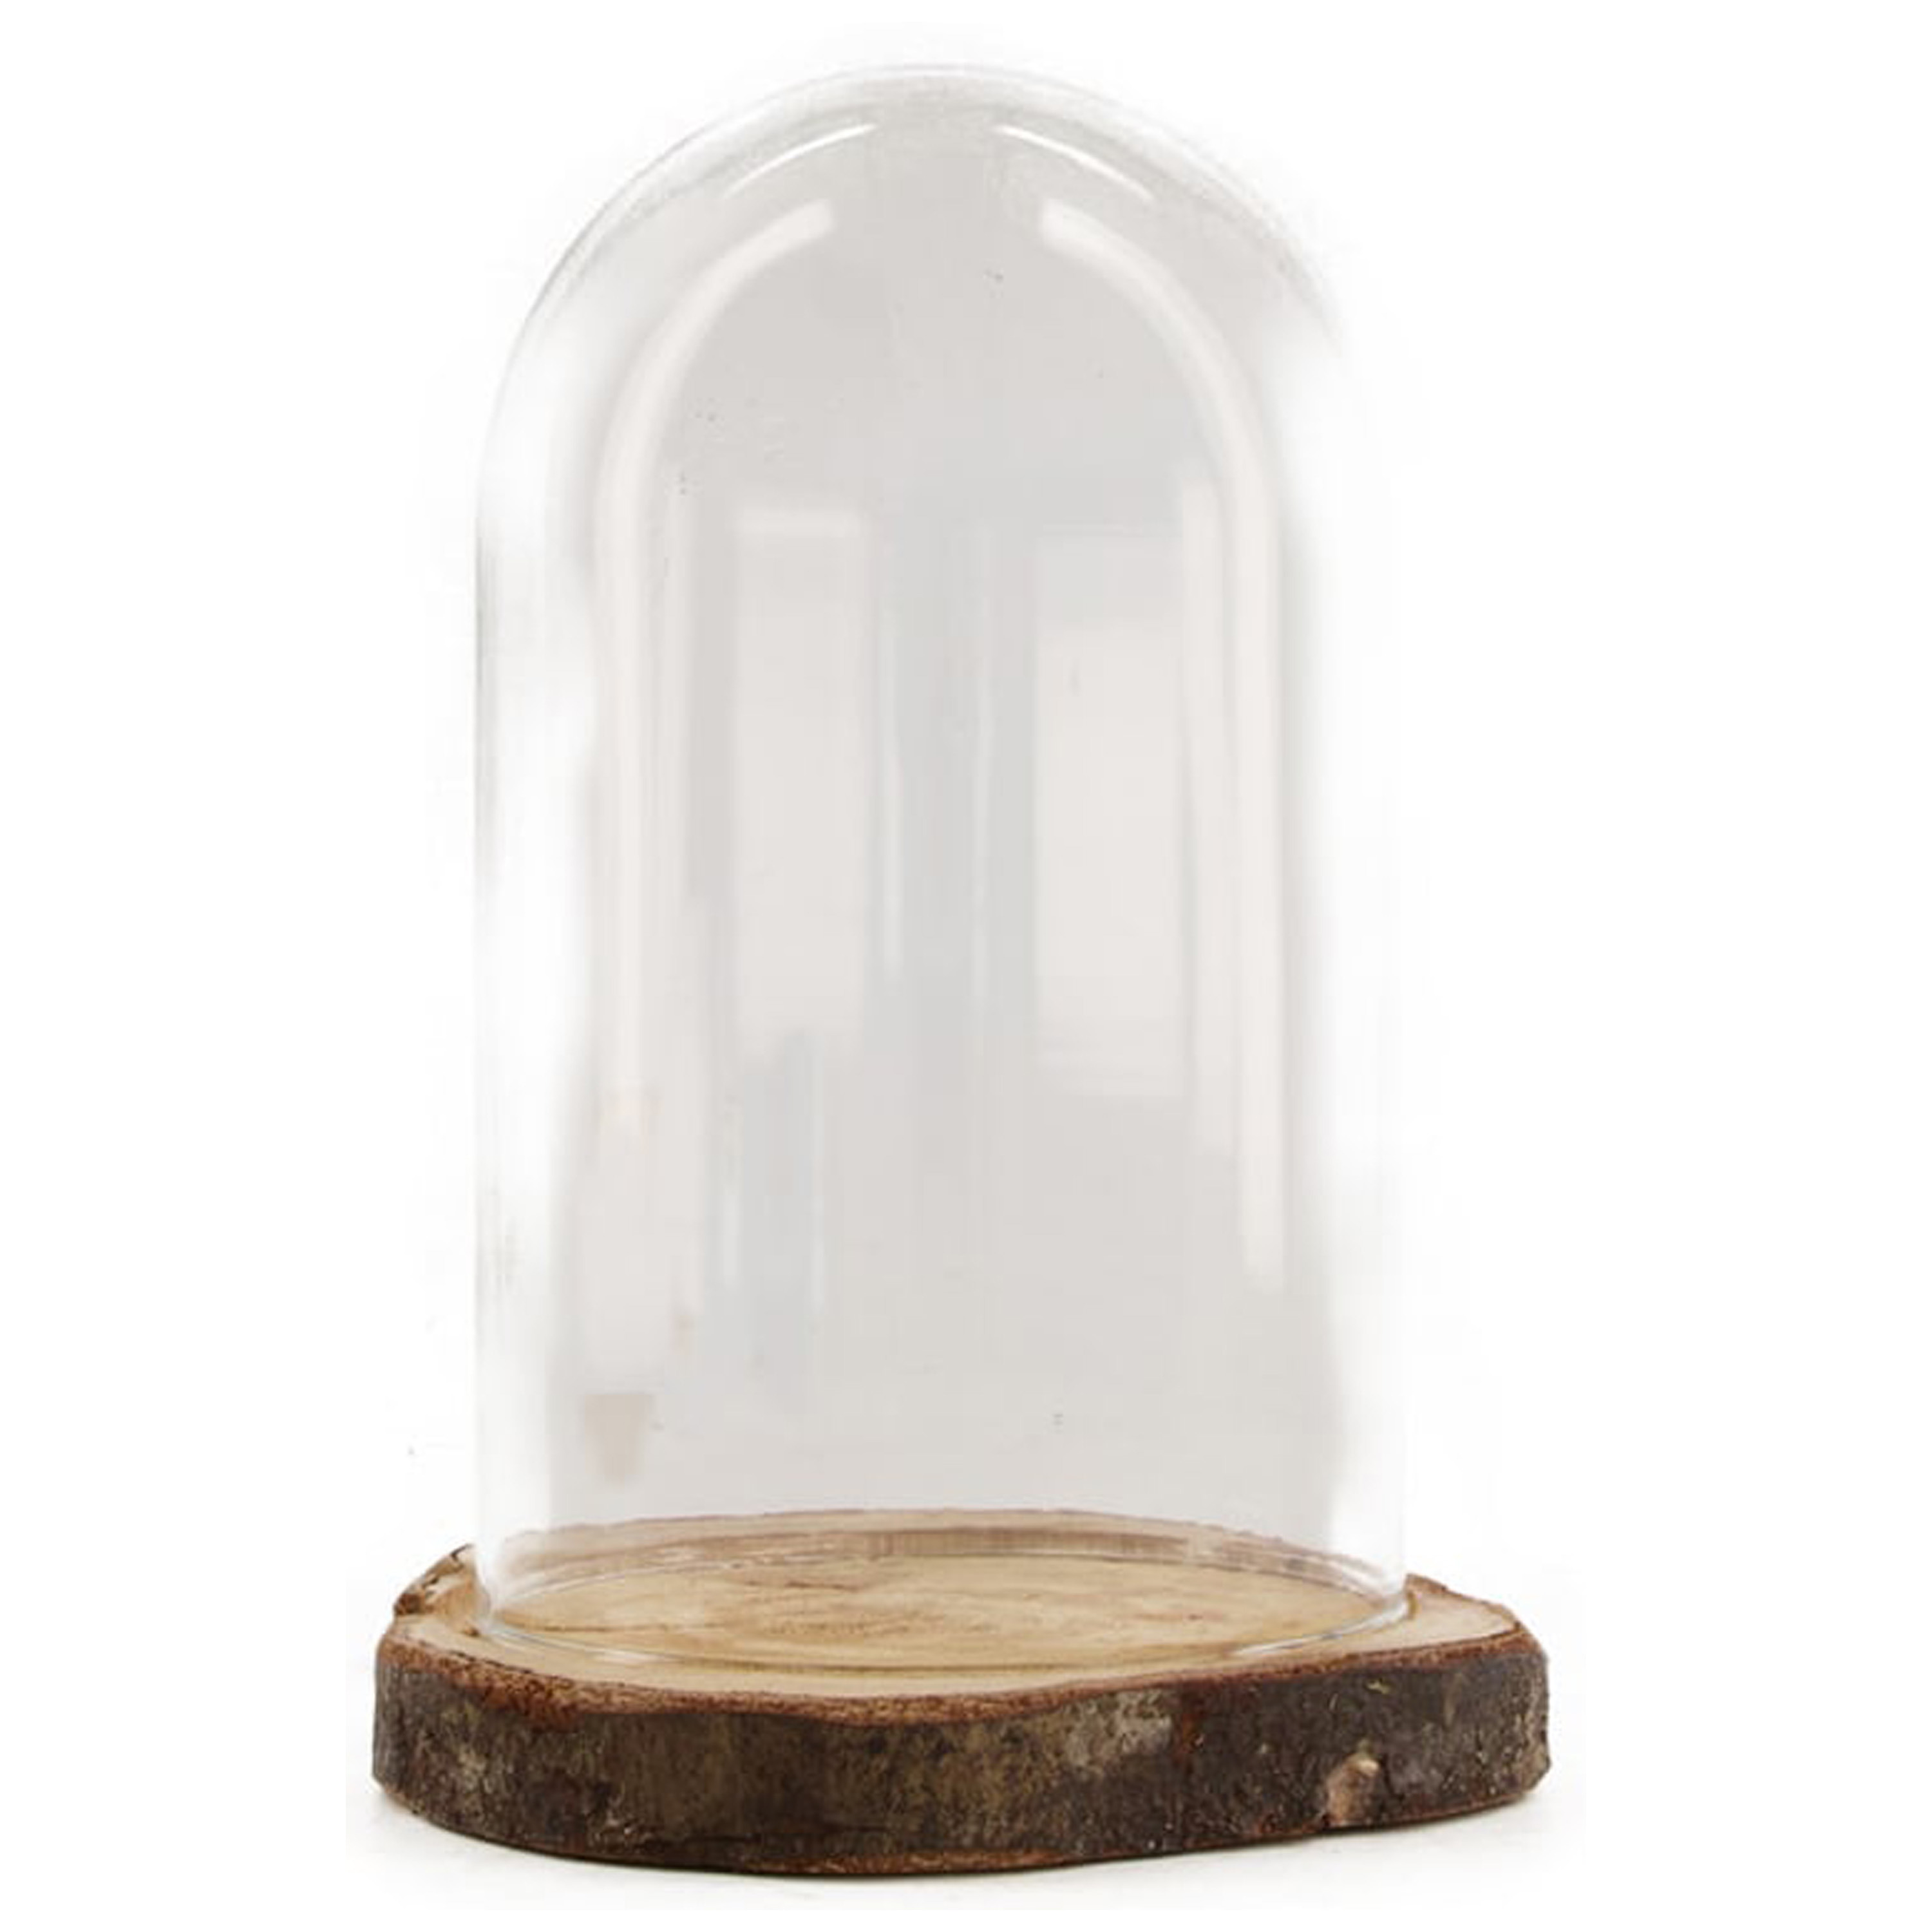 Dijk Natural Collections stolp - glas - houten bruin plateau - D17 x H22 cm -